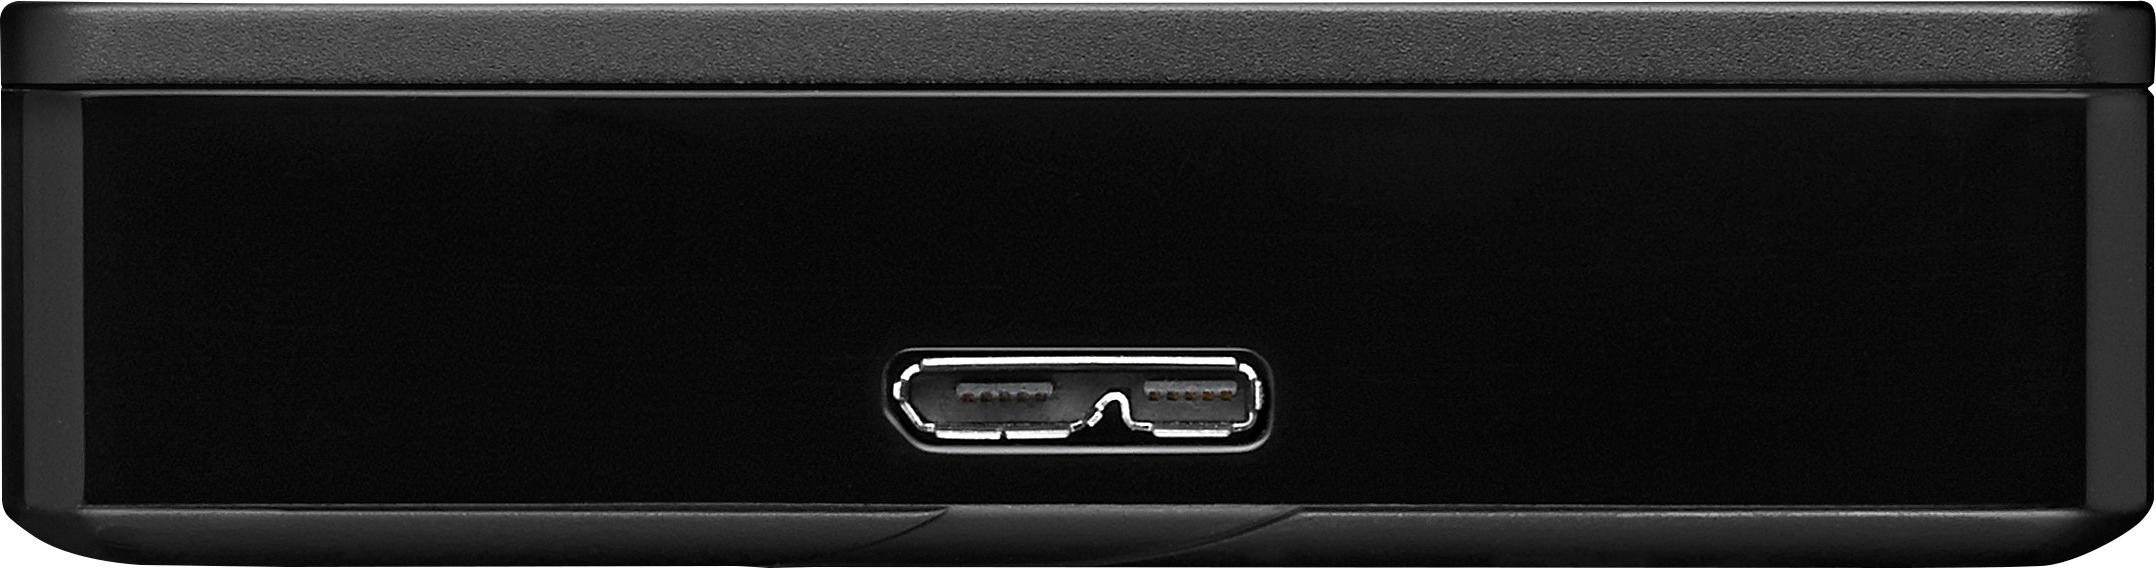 Seagate - Backup Plus Slim 4TB External USB 3.0/2.0 Portable Hard Drive - Black - AlternateView12 Zoom